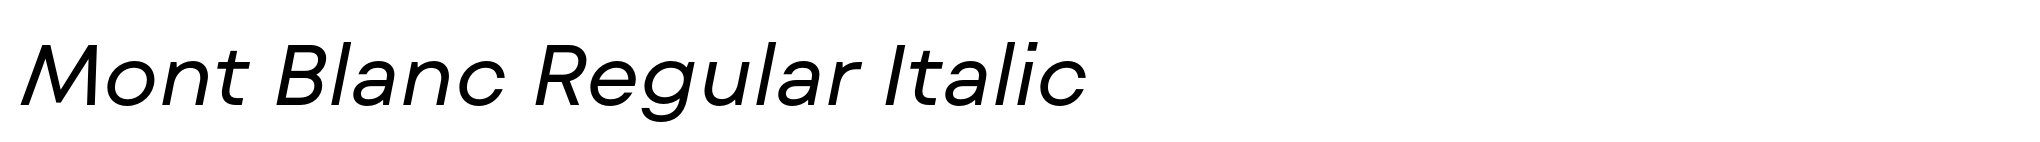 Mont Blanc Regular Italic image